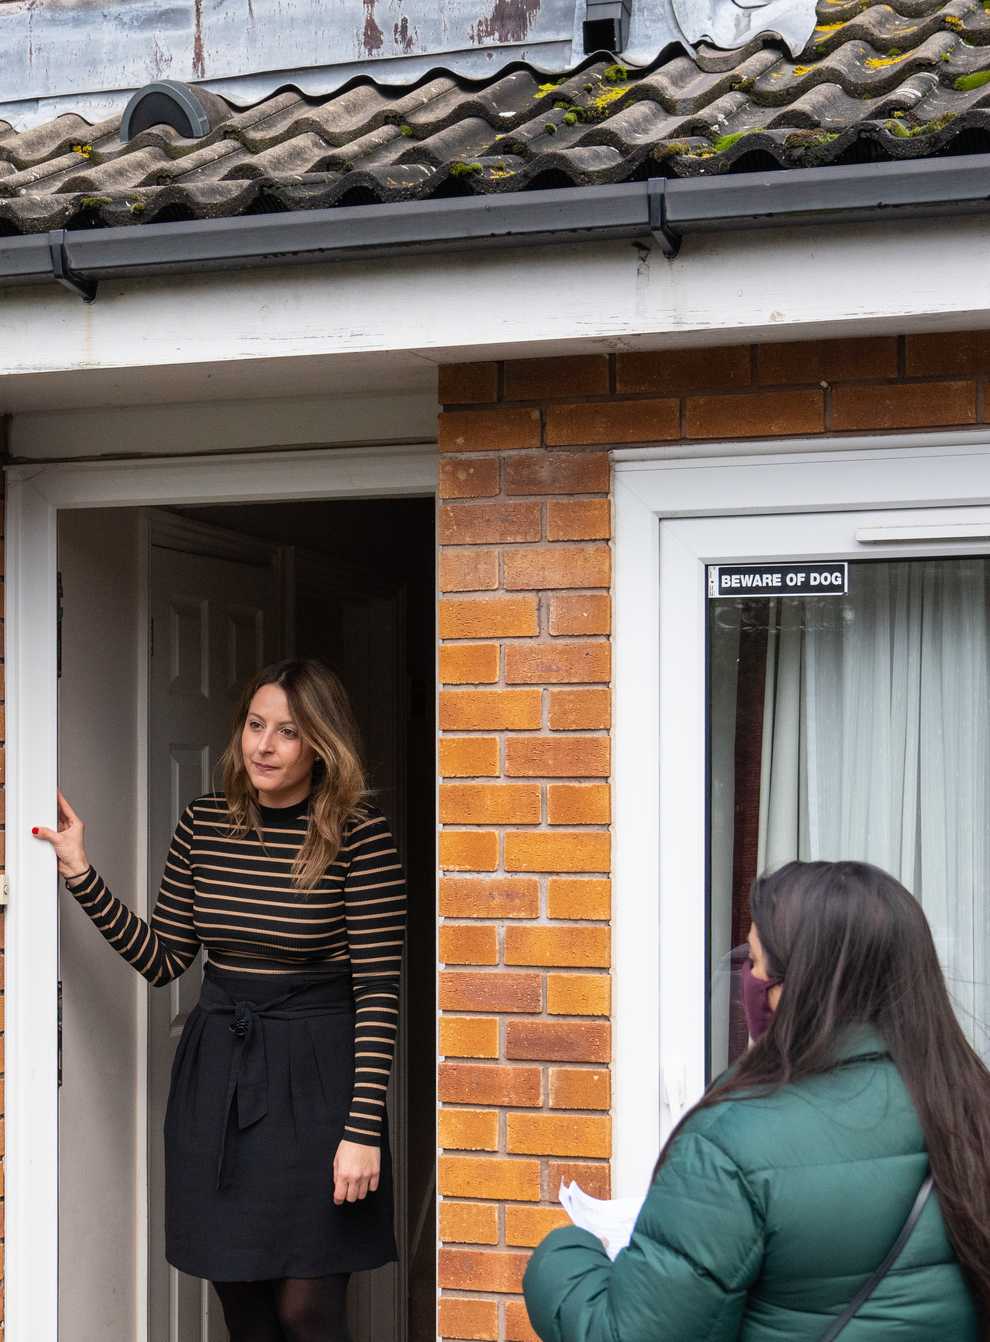 Volunteers speak to residents while carrying out door-to-door coronavirus testing in Woking